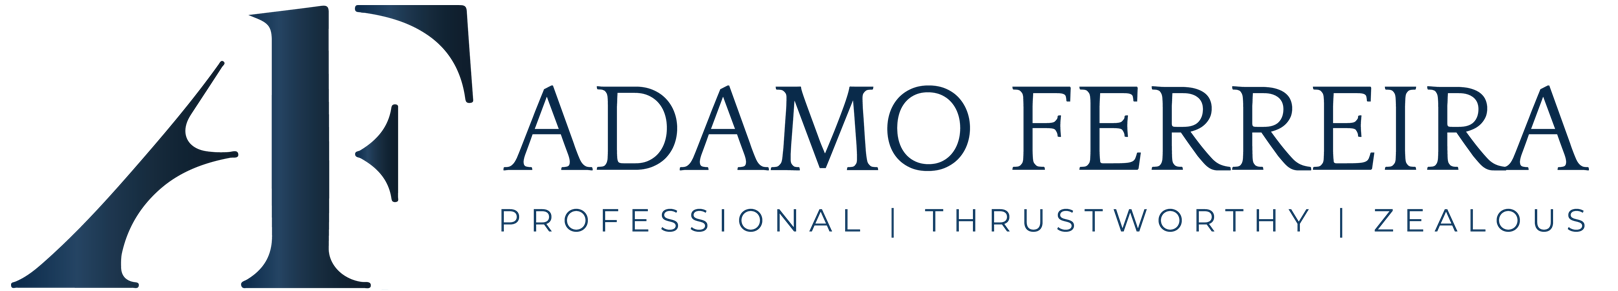 Adamo-logo-small